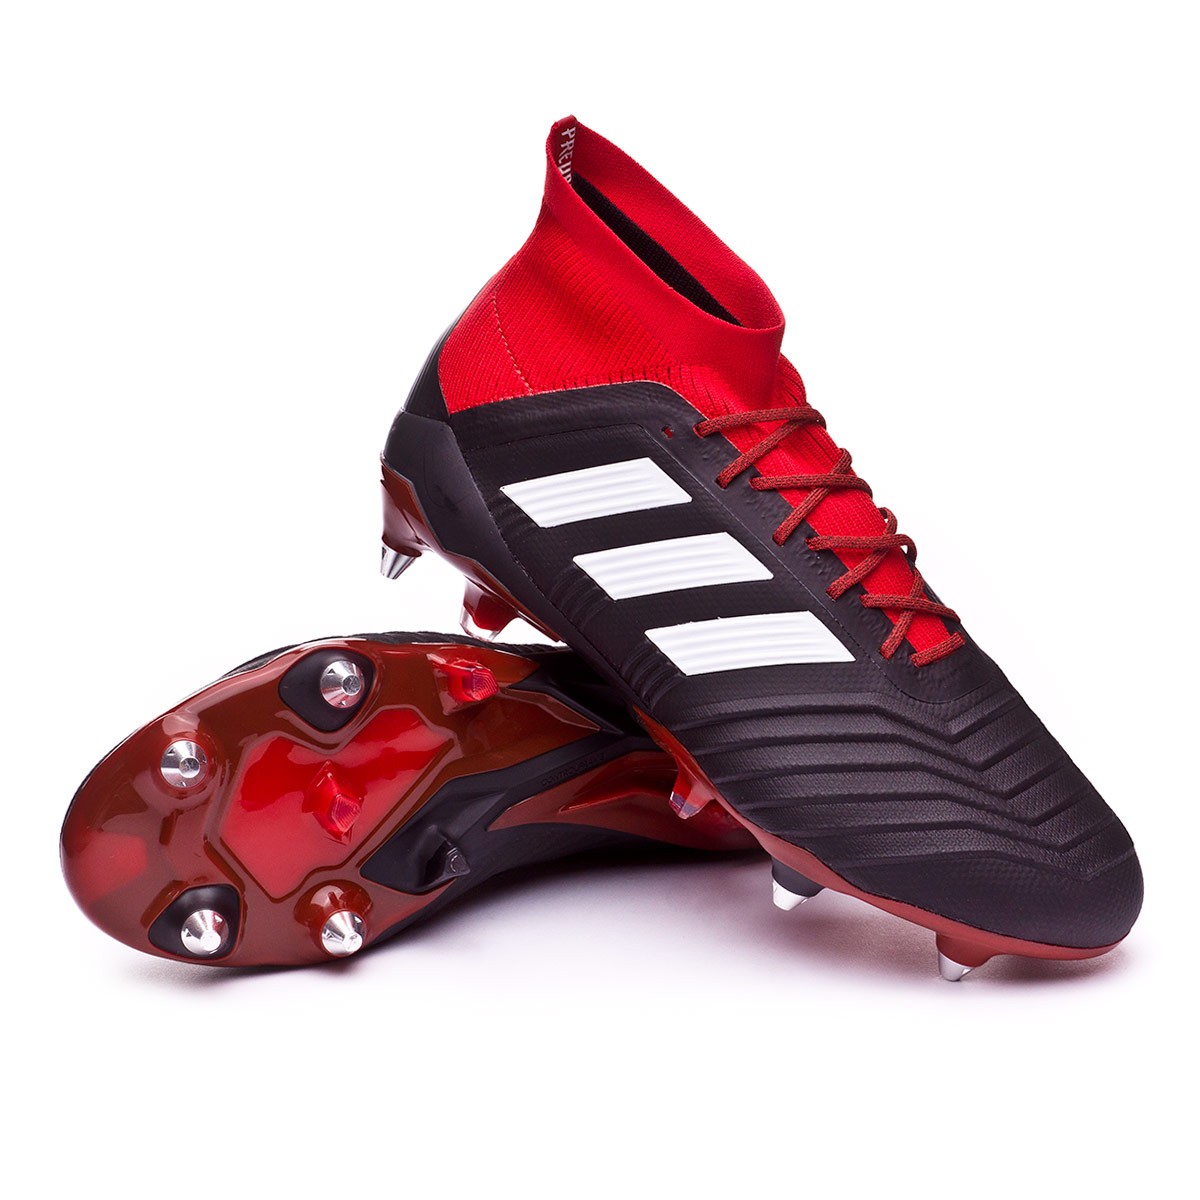 Football Boots adidas Predator 18.1 SG 